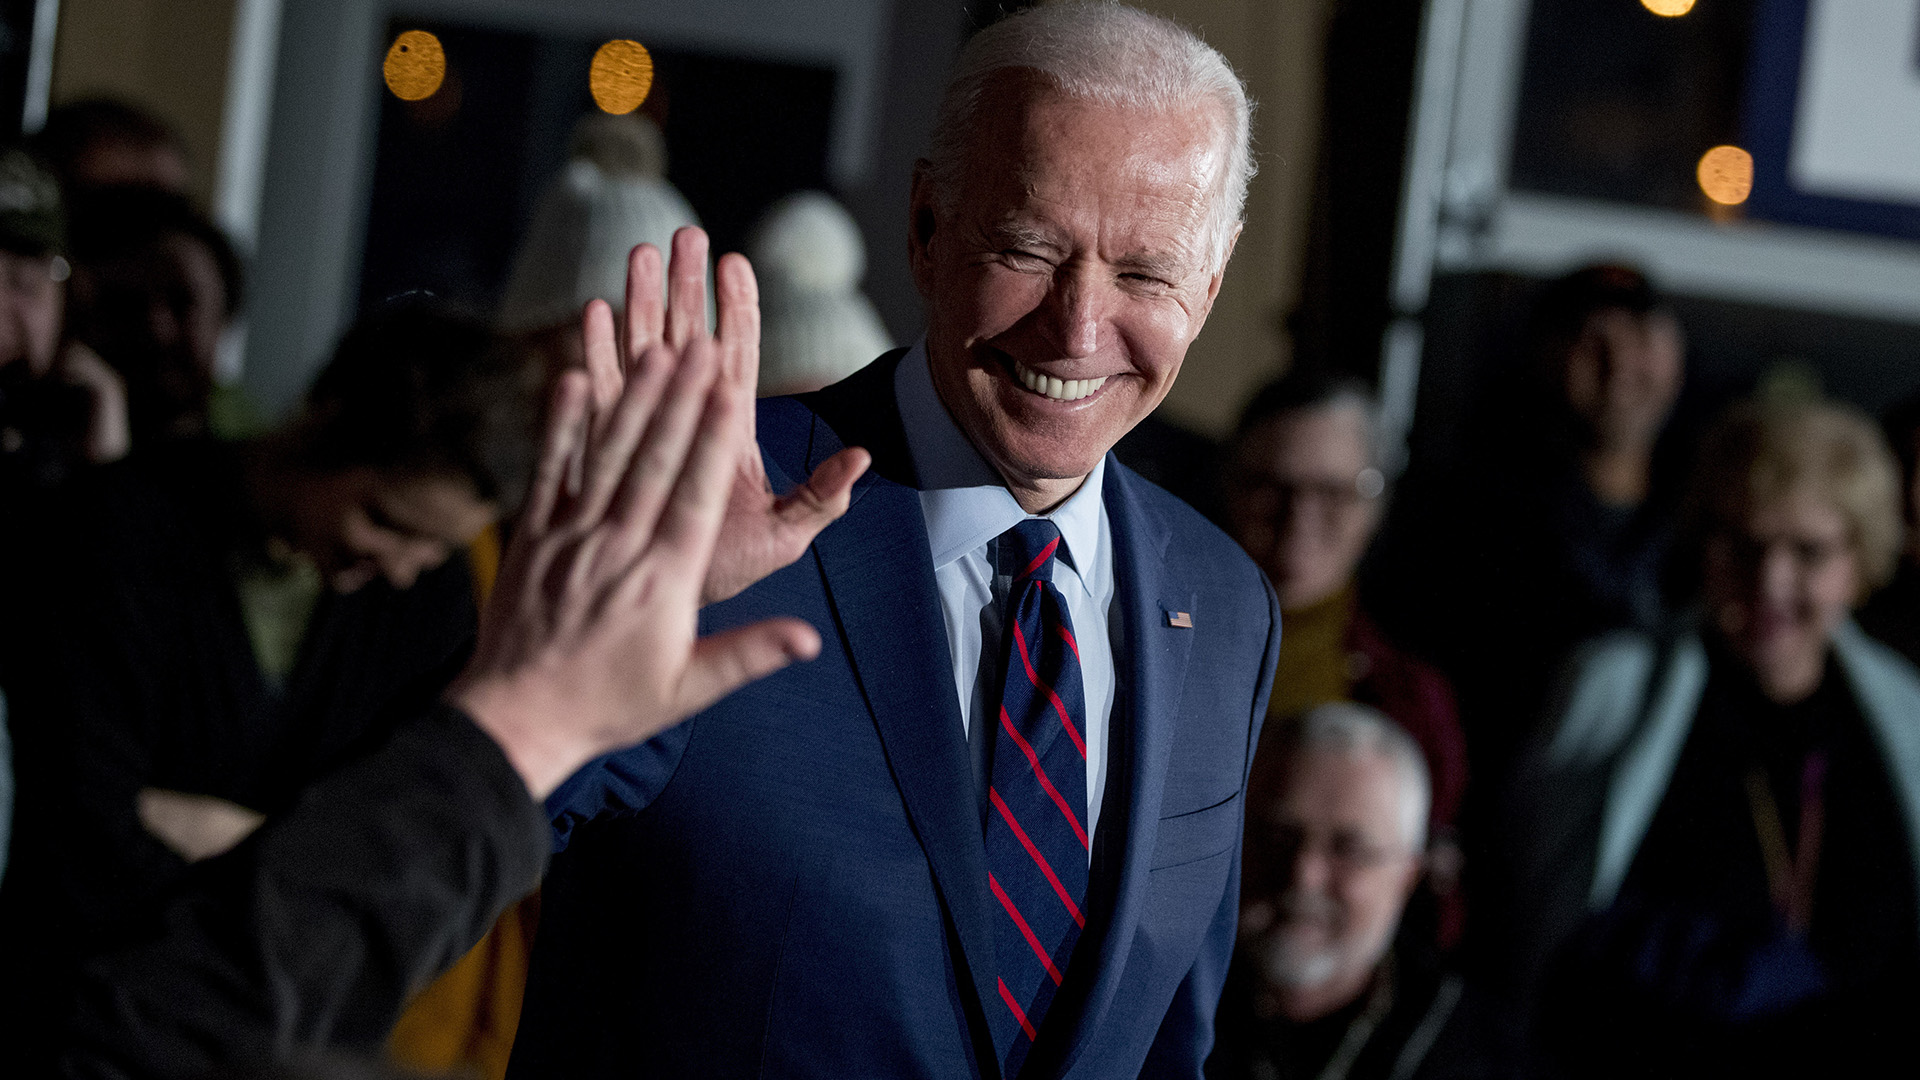 Biden formally clinches Democratic presidential nomination